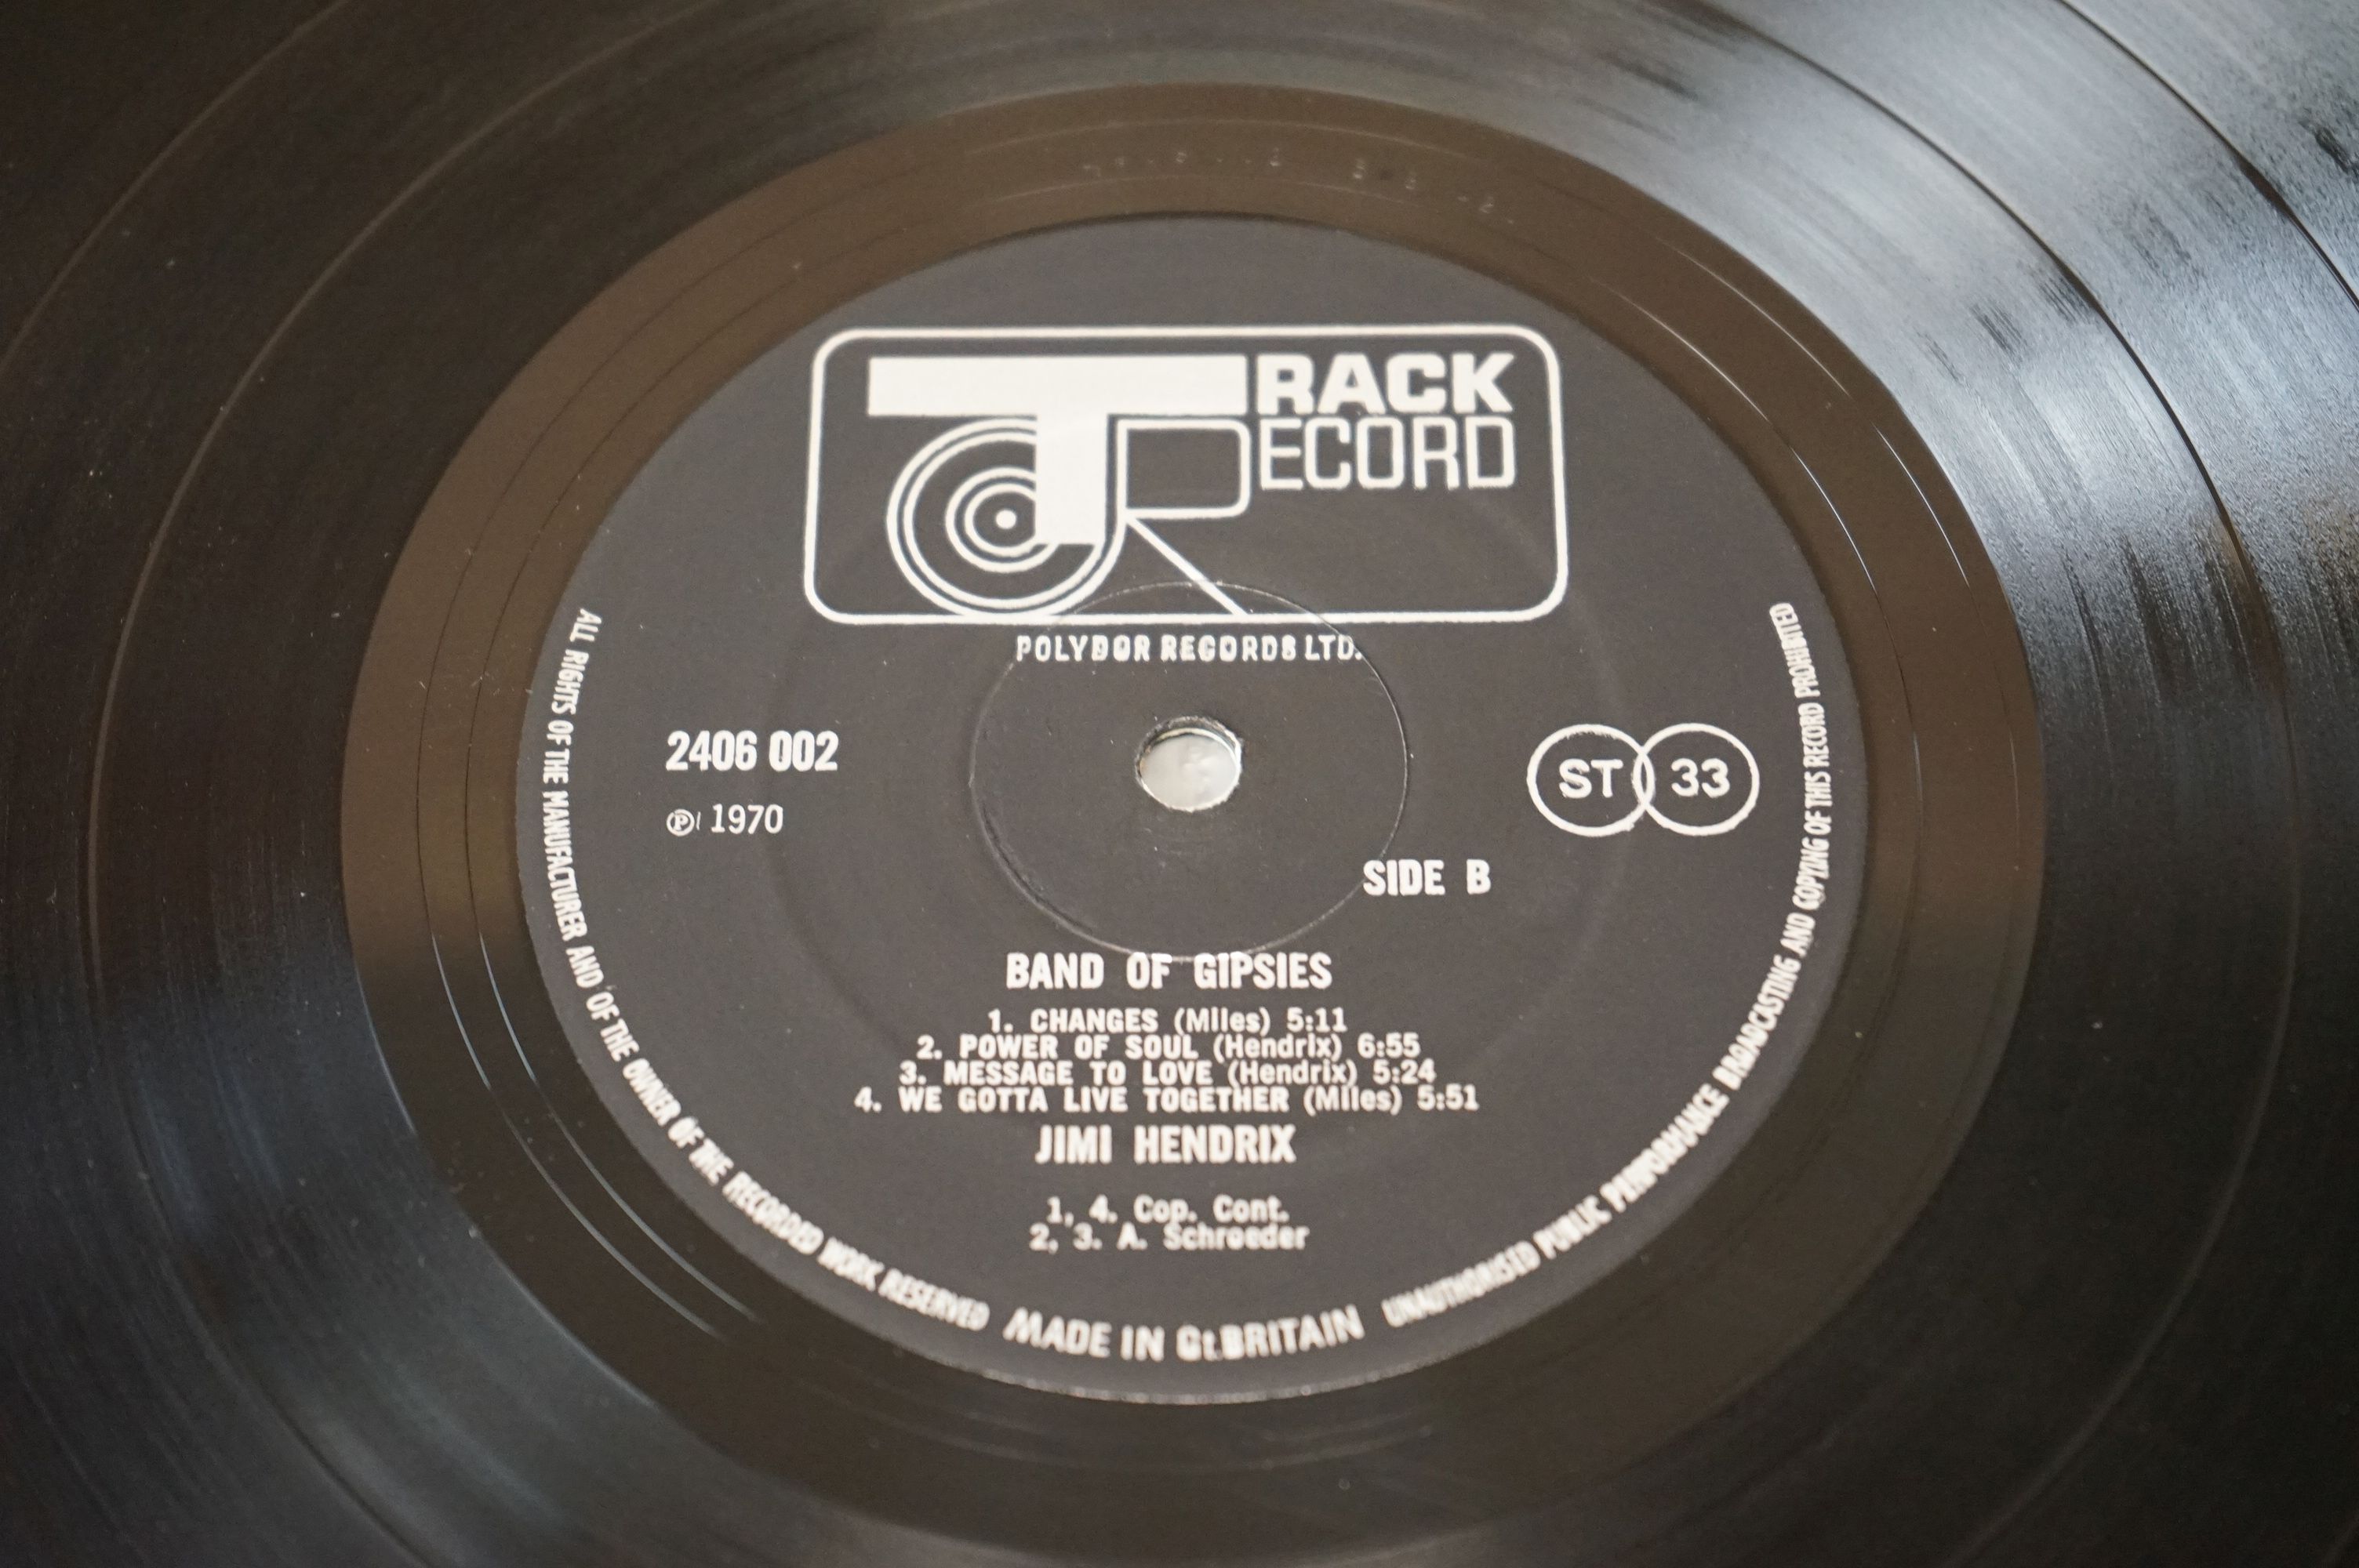 Vinyl - Jimi Hendrix Band Of Gypsys on Track 2406 002 'puppet' sleeve. Vg+ - Image 5 of 6